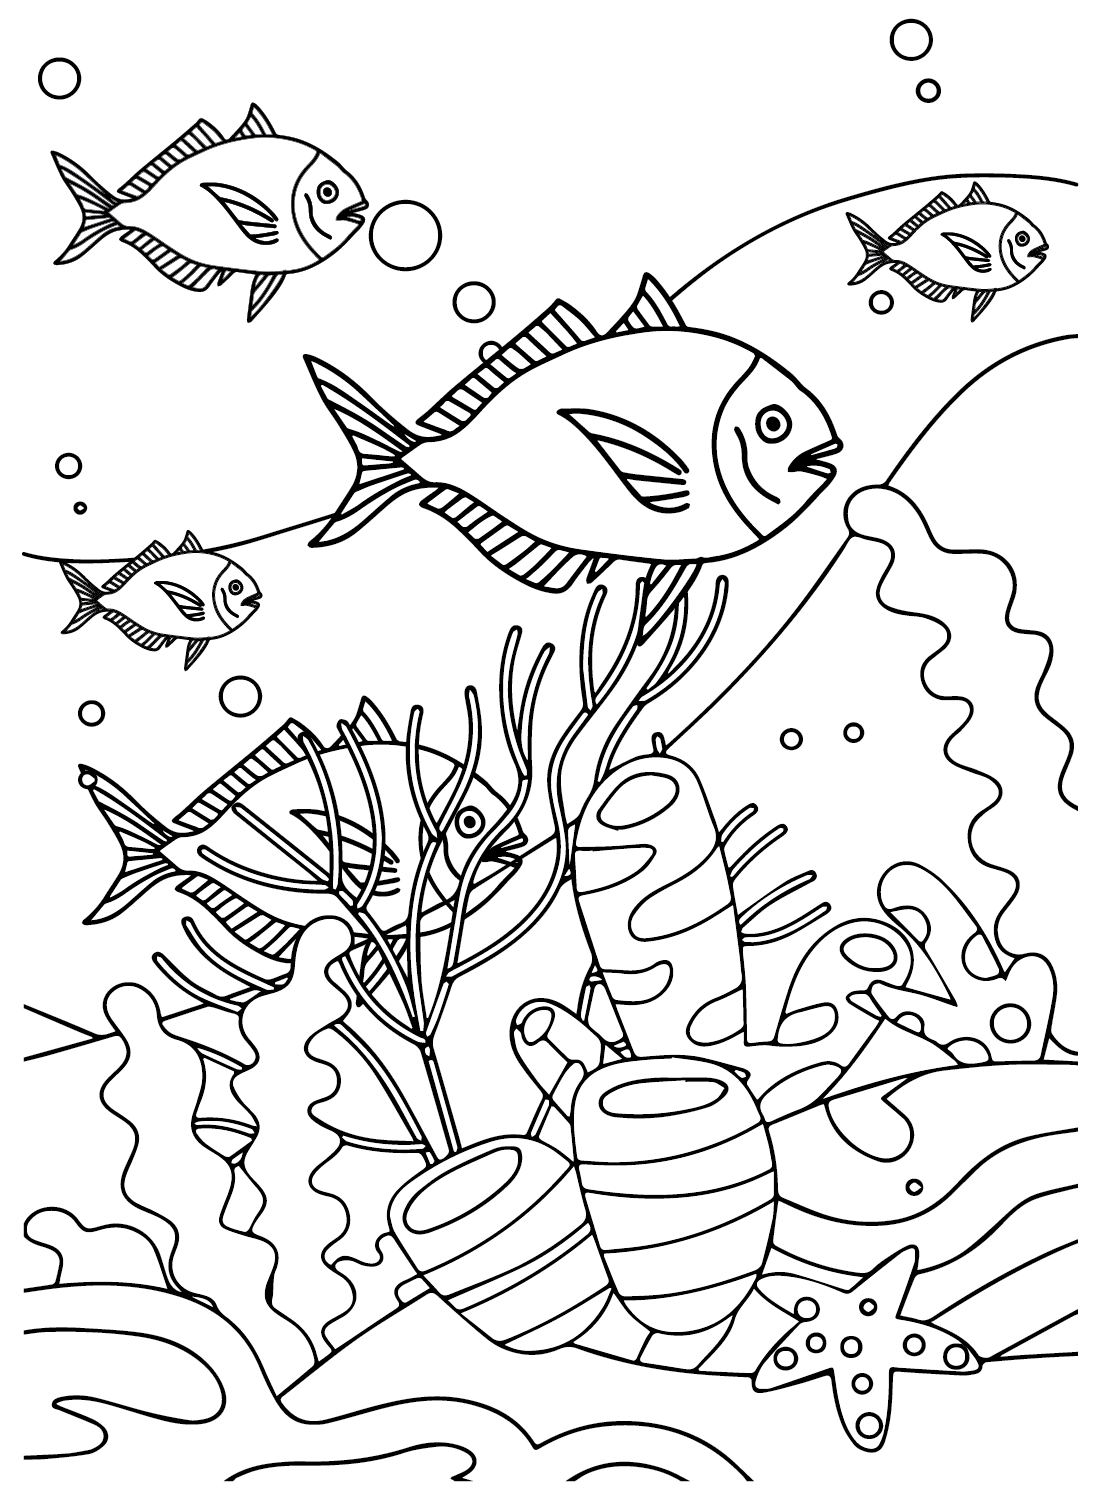 Basses Fish color Sheets from Bass Fish